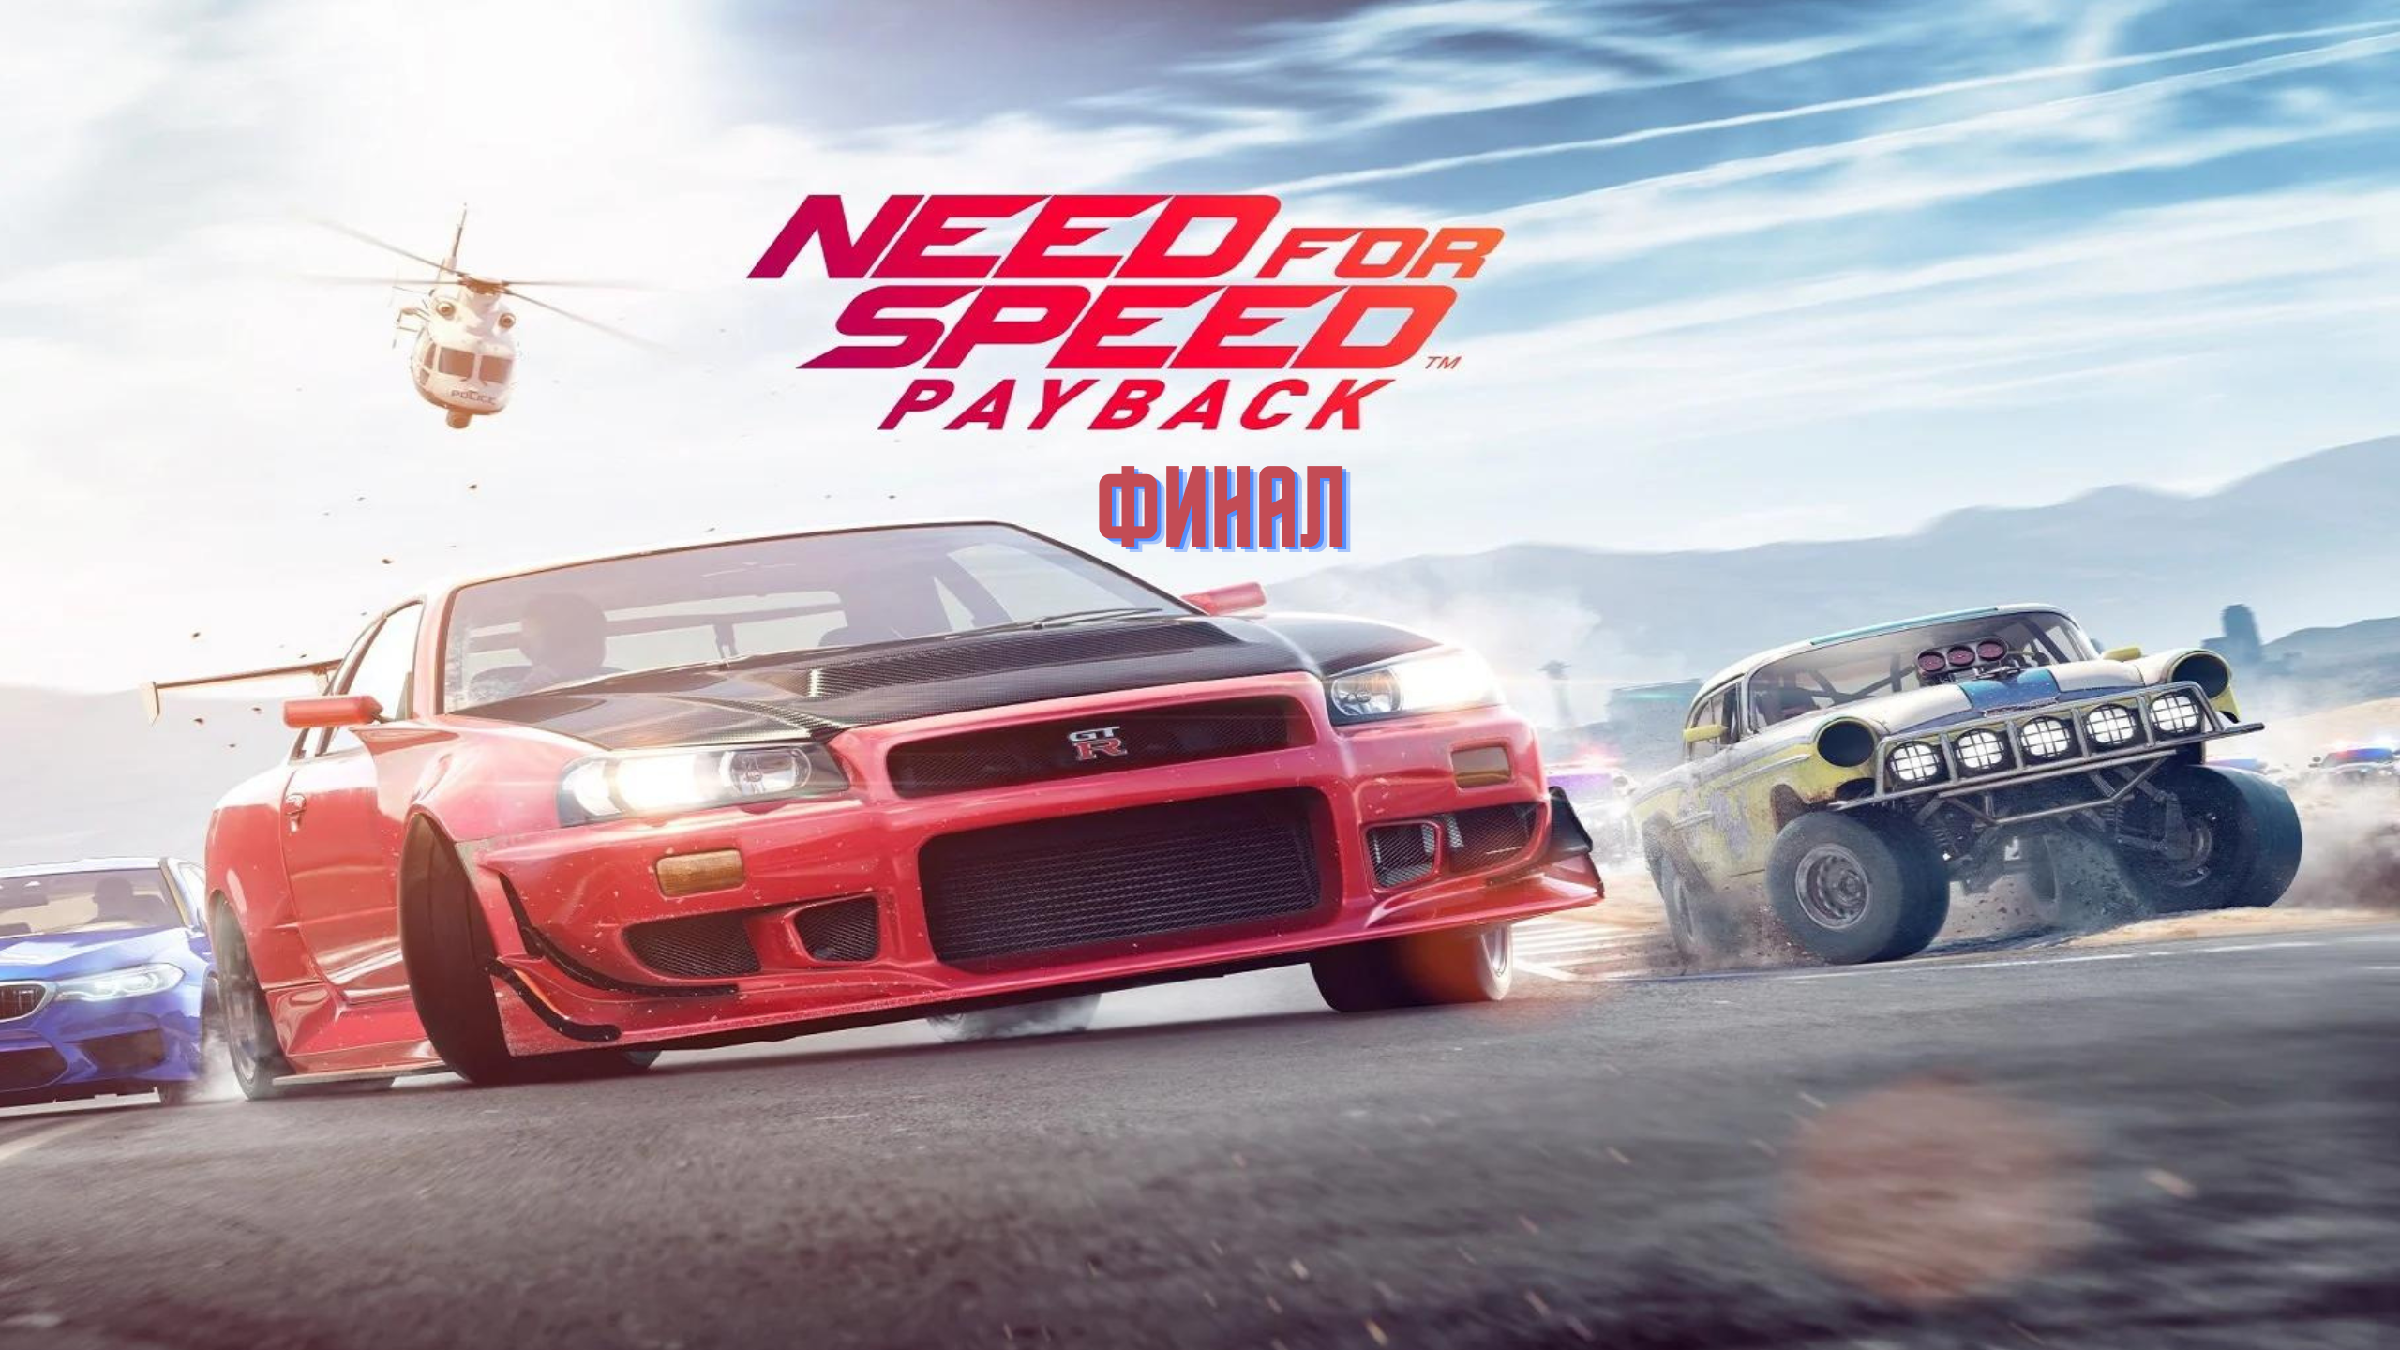 Need for speed 2017. Need for Speed: Payback. Need for Speed™ Payback - издание Deluxe. Картинки need for Speed Payback. Need for Speed: Payback (2017).